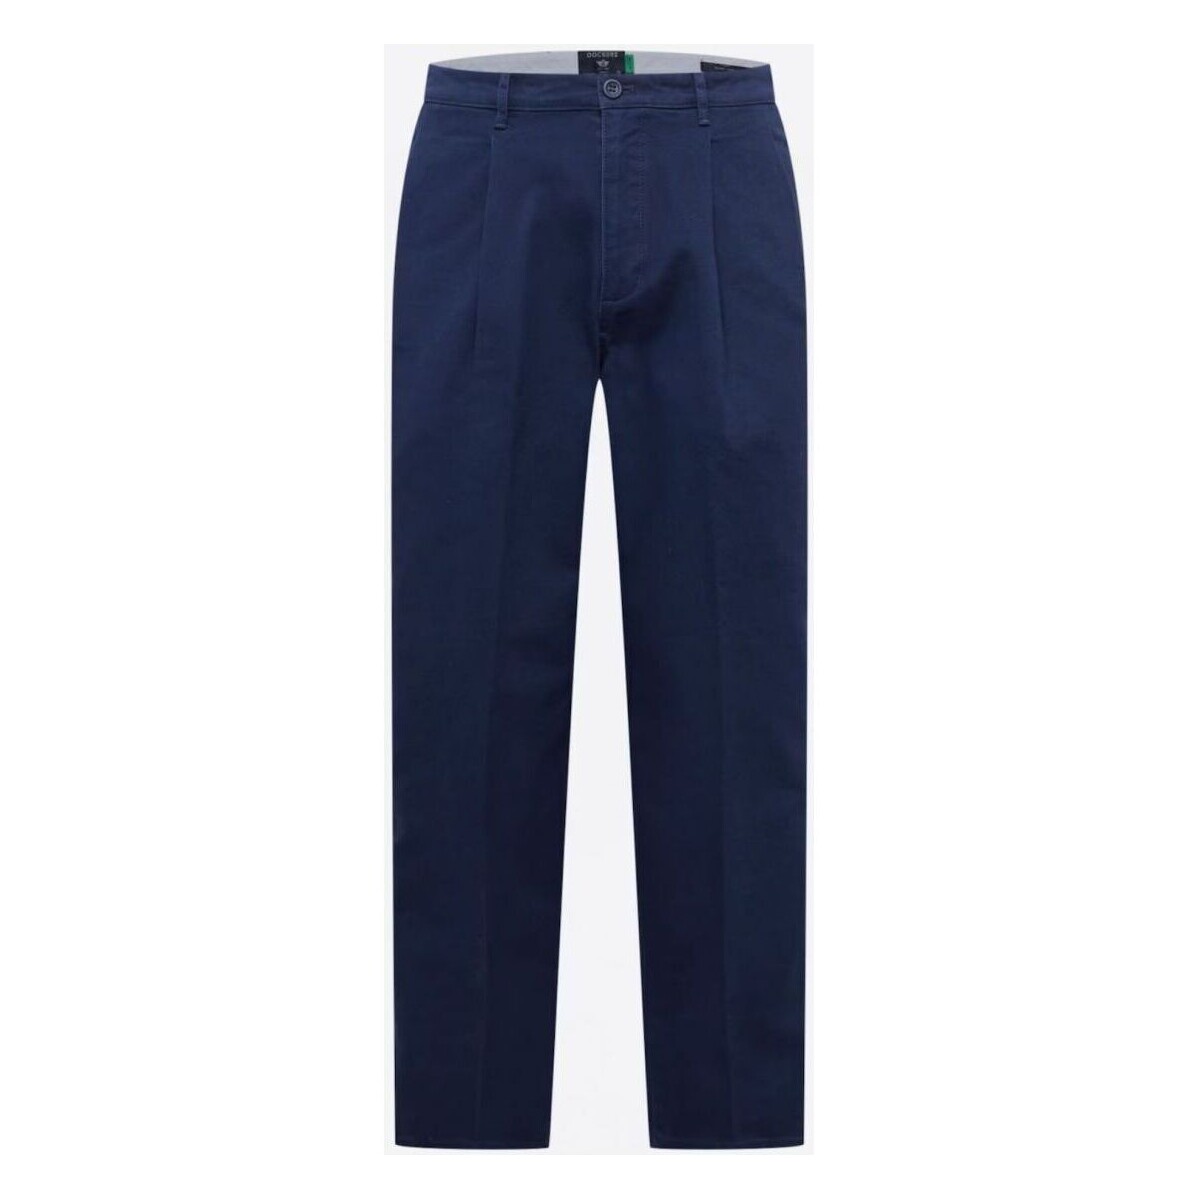 textil Hombre Pantalones Dockers A5779 0005 - PULL ON SLIM TAPARED-NAVY BLAZER Azul